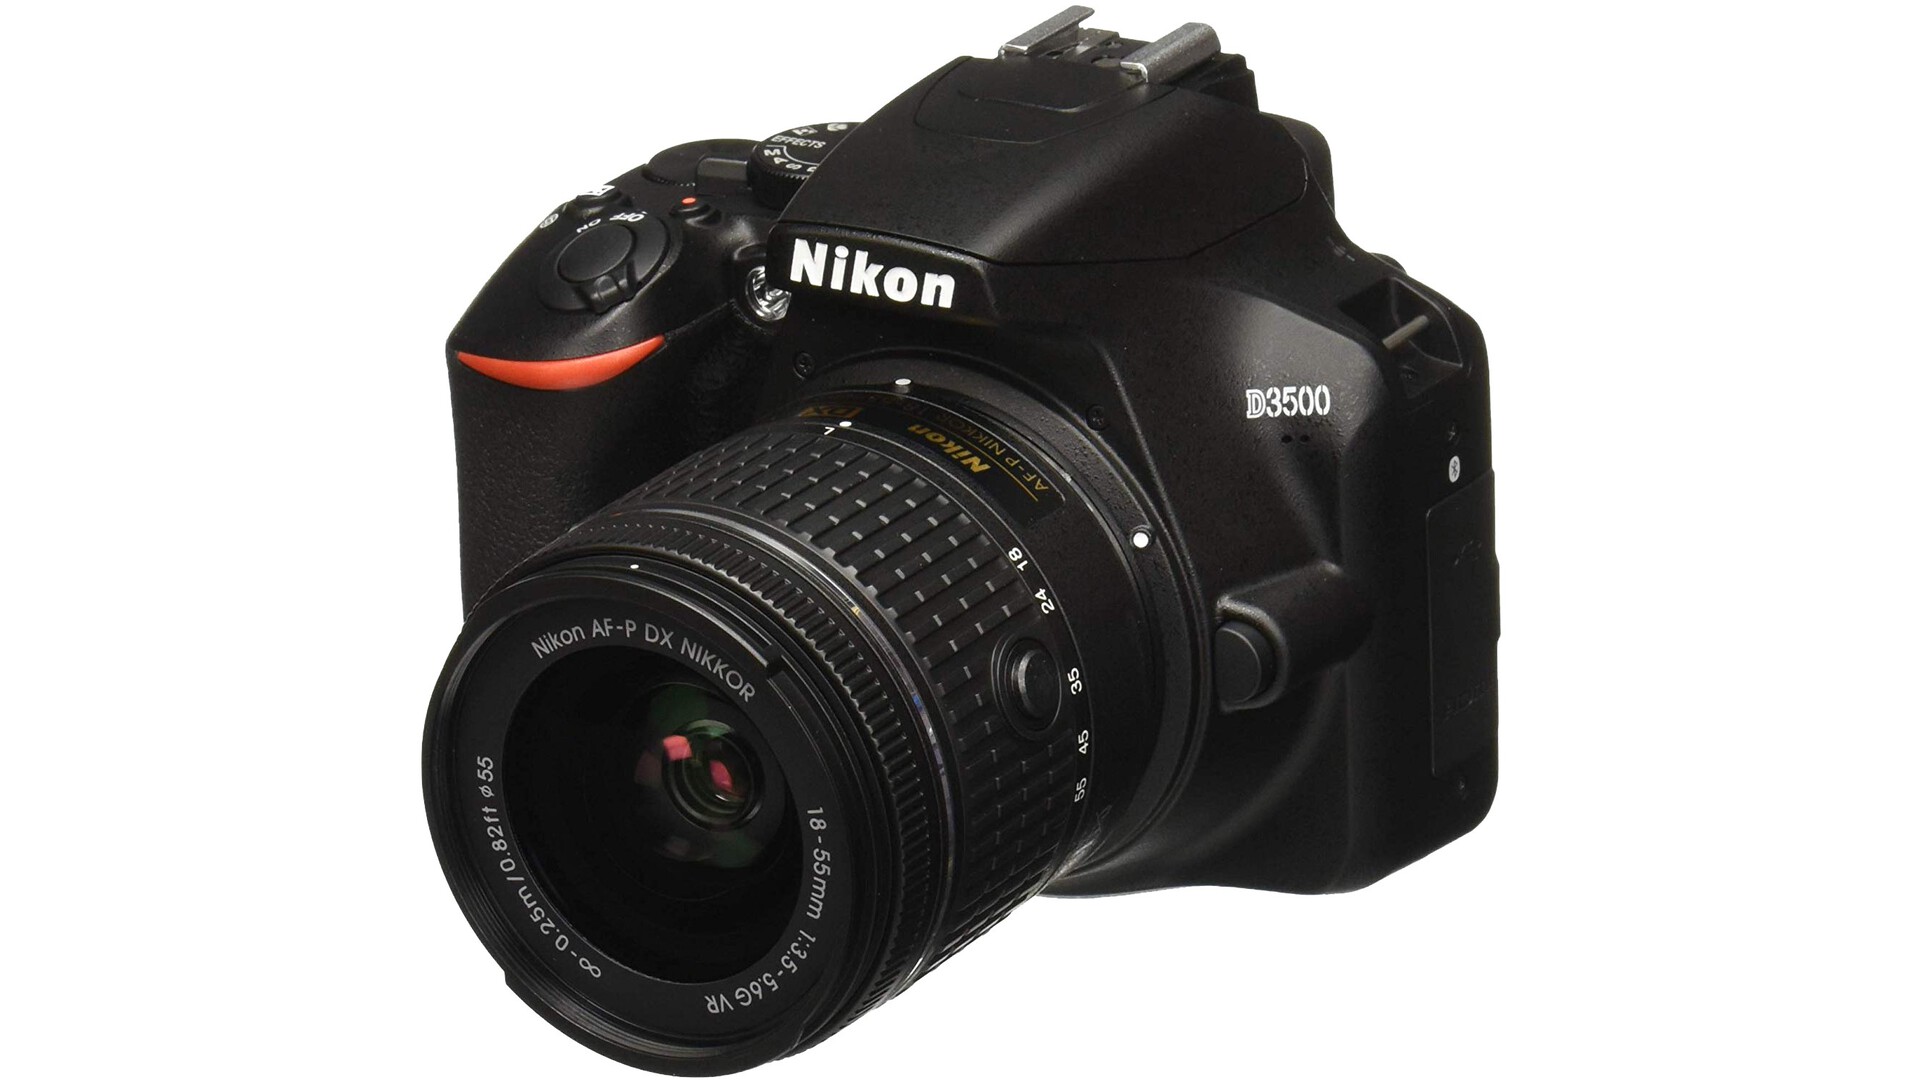 Nikon D3500 with kit lens